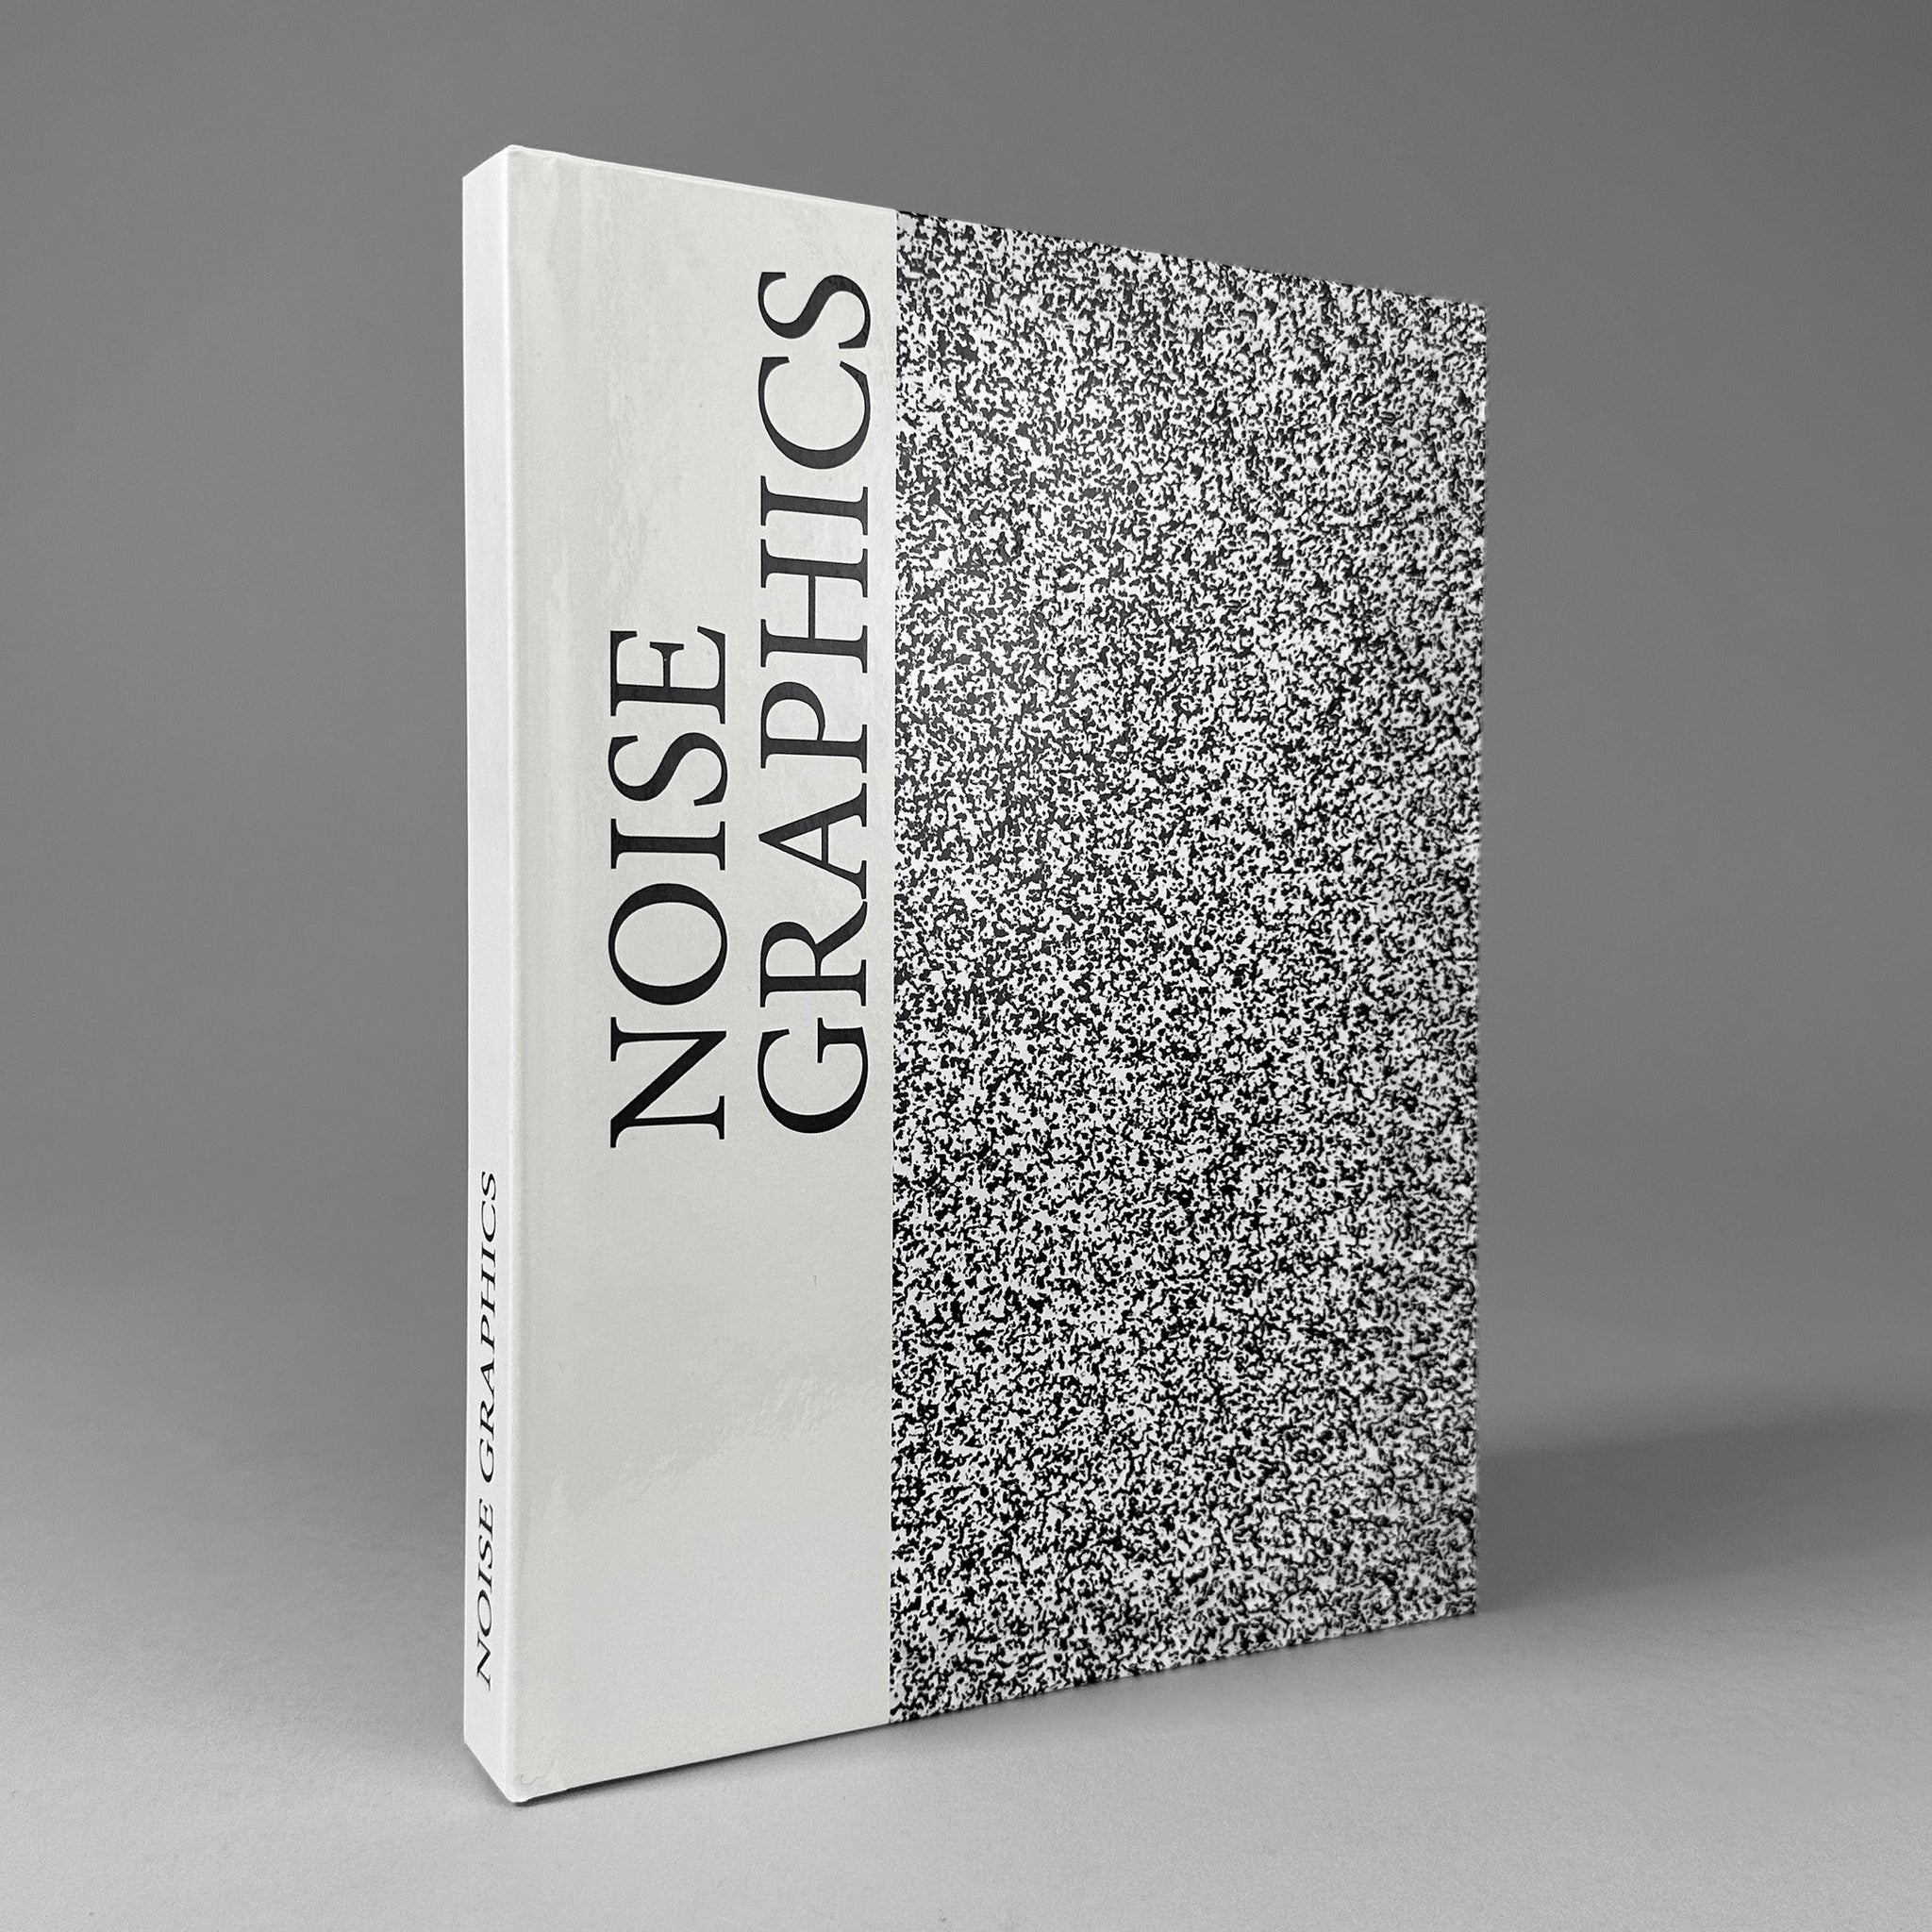 Noise Graphics (1980-1990)